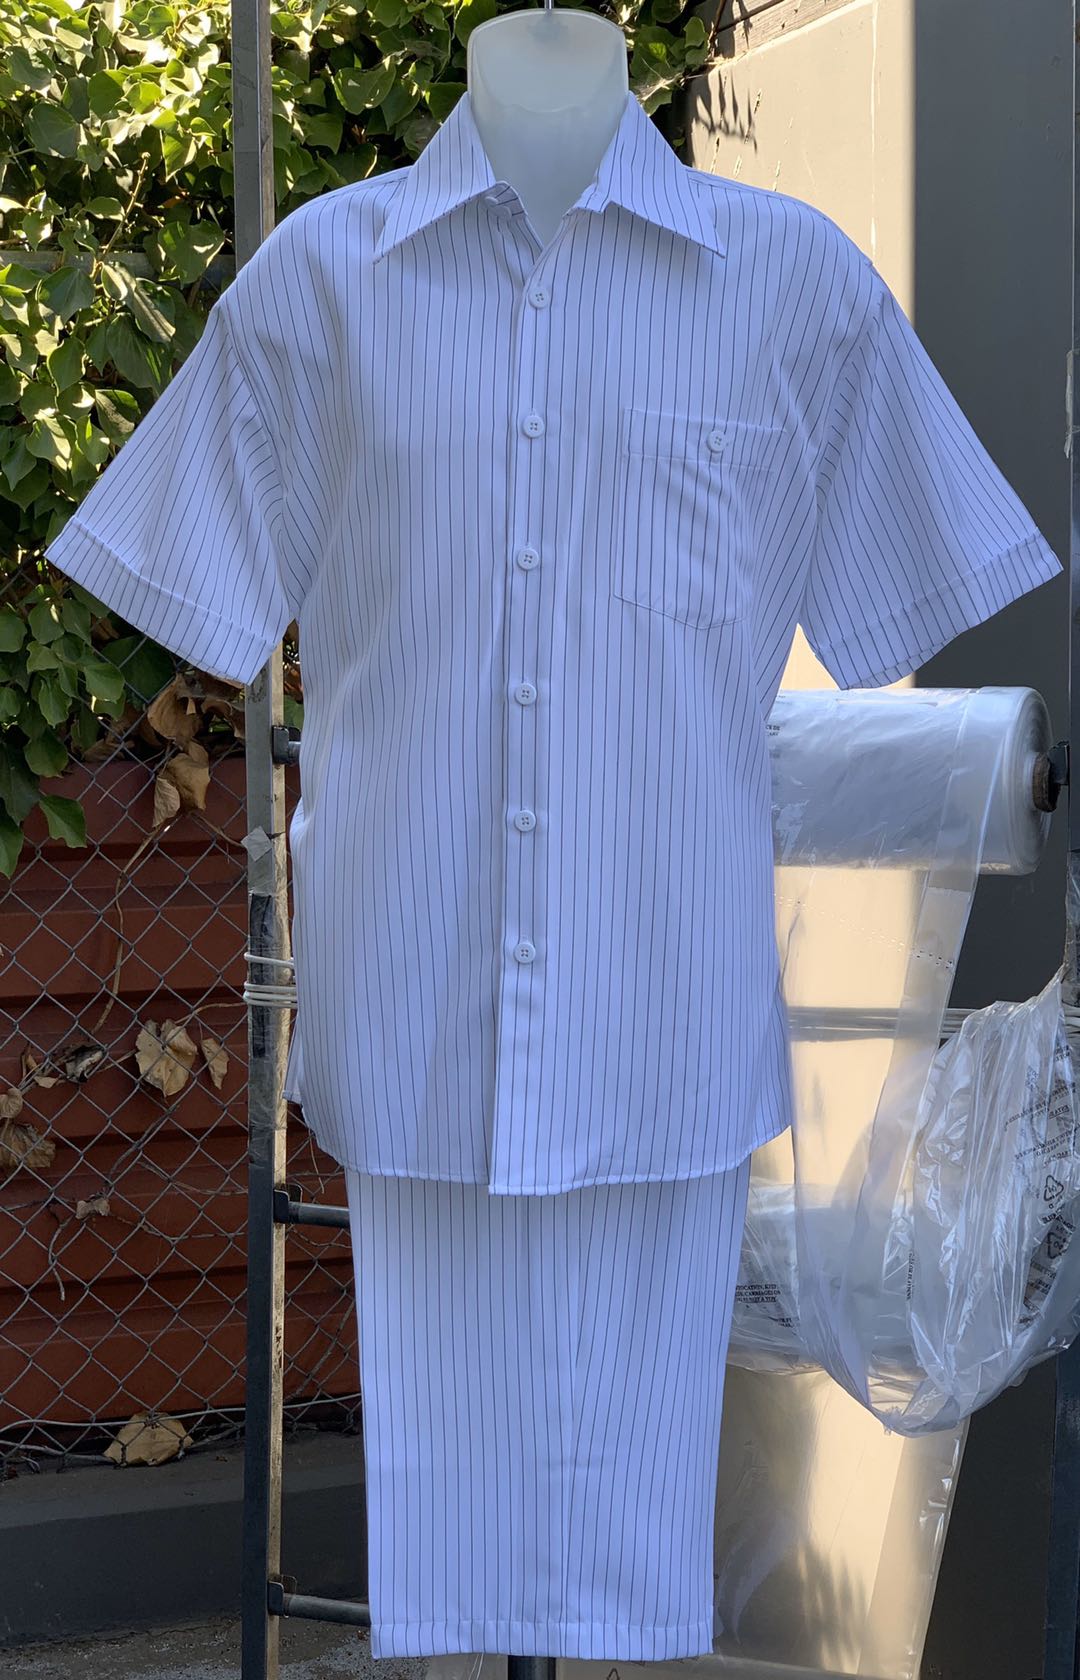 Brilliant Stripes Short Sleeve 2pc Walking Suit Shorts Set - White/Black